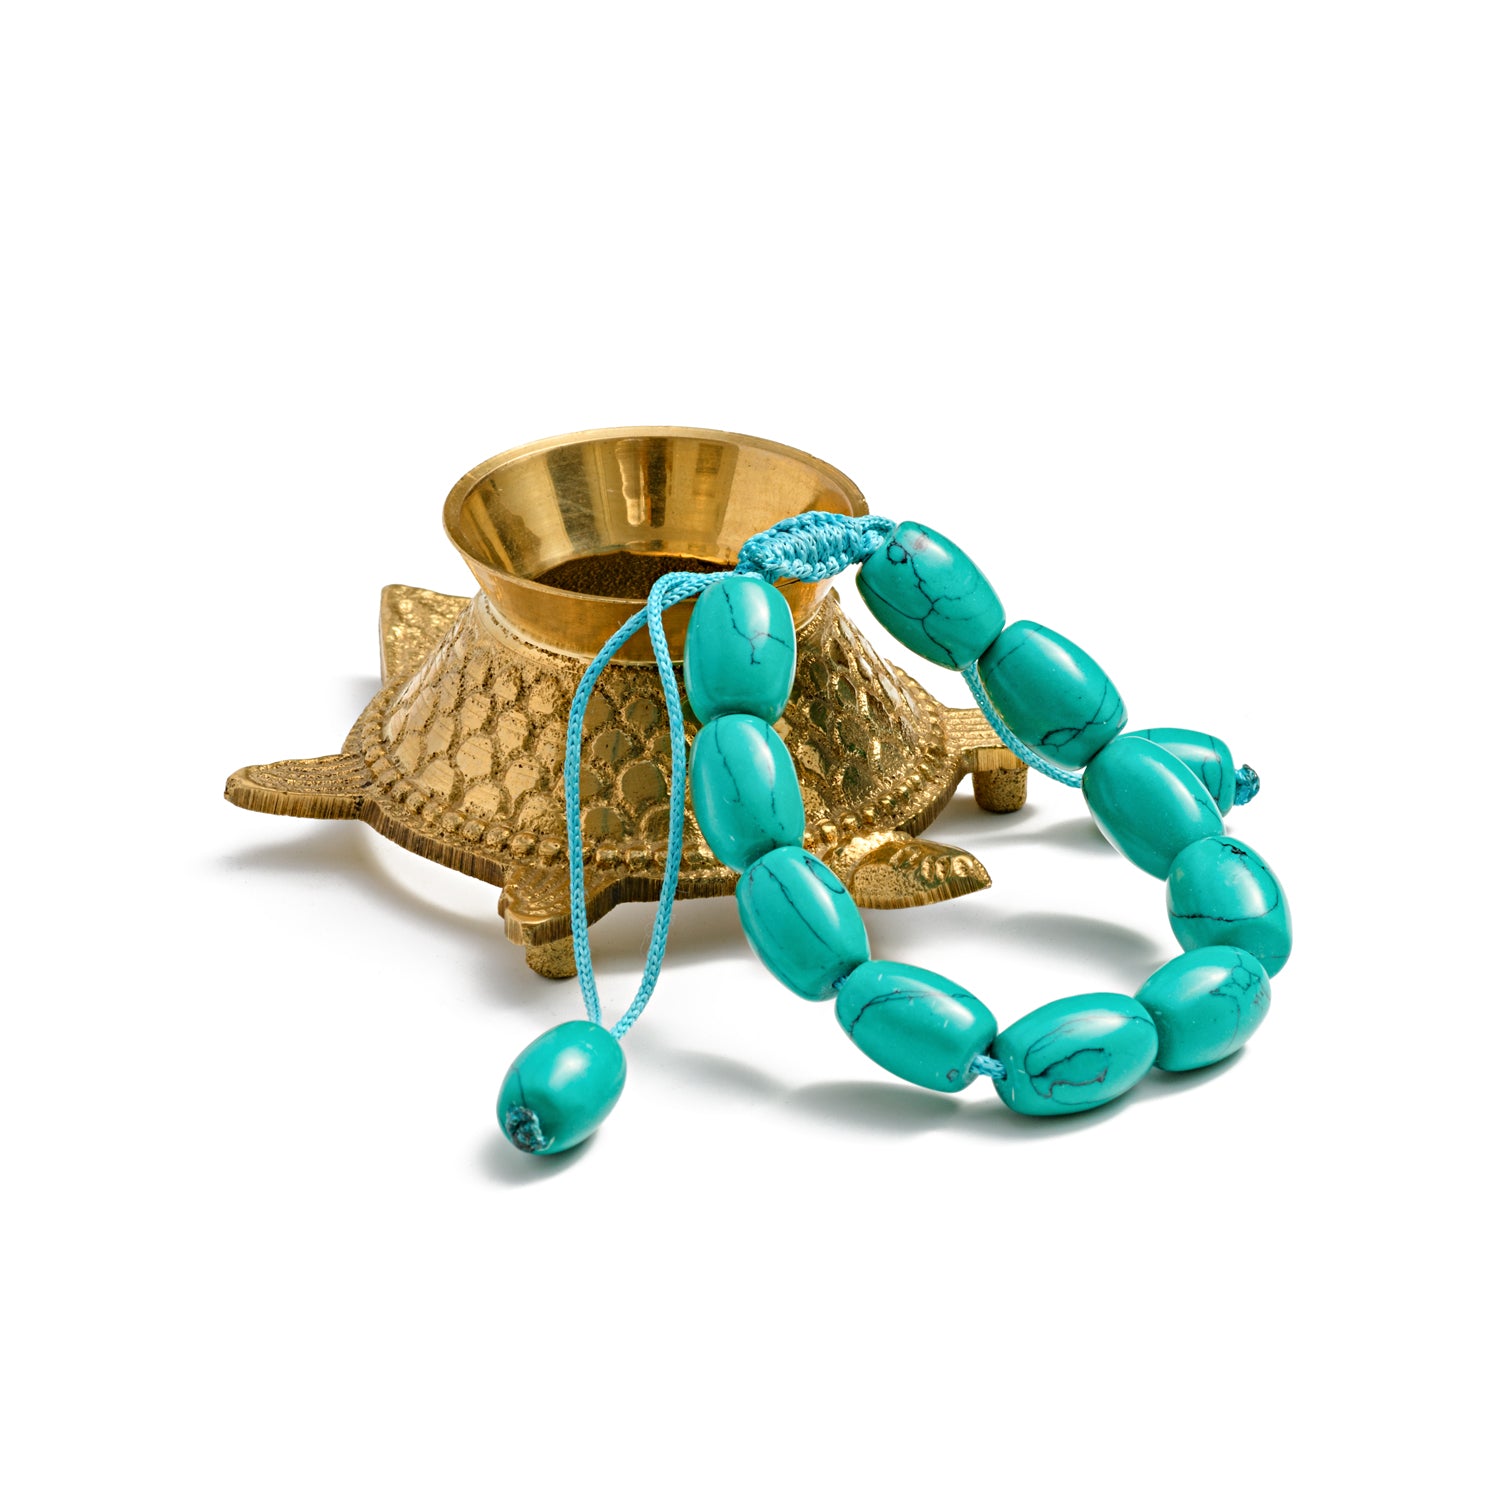 Turquoise Oval Beads Adjustable Bracelet